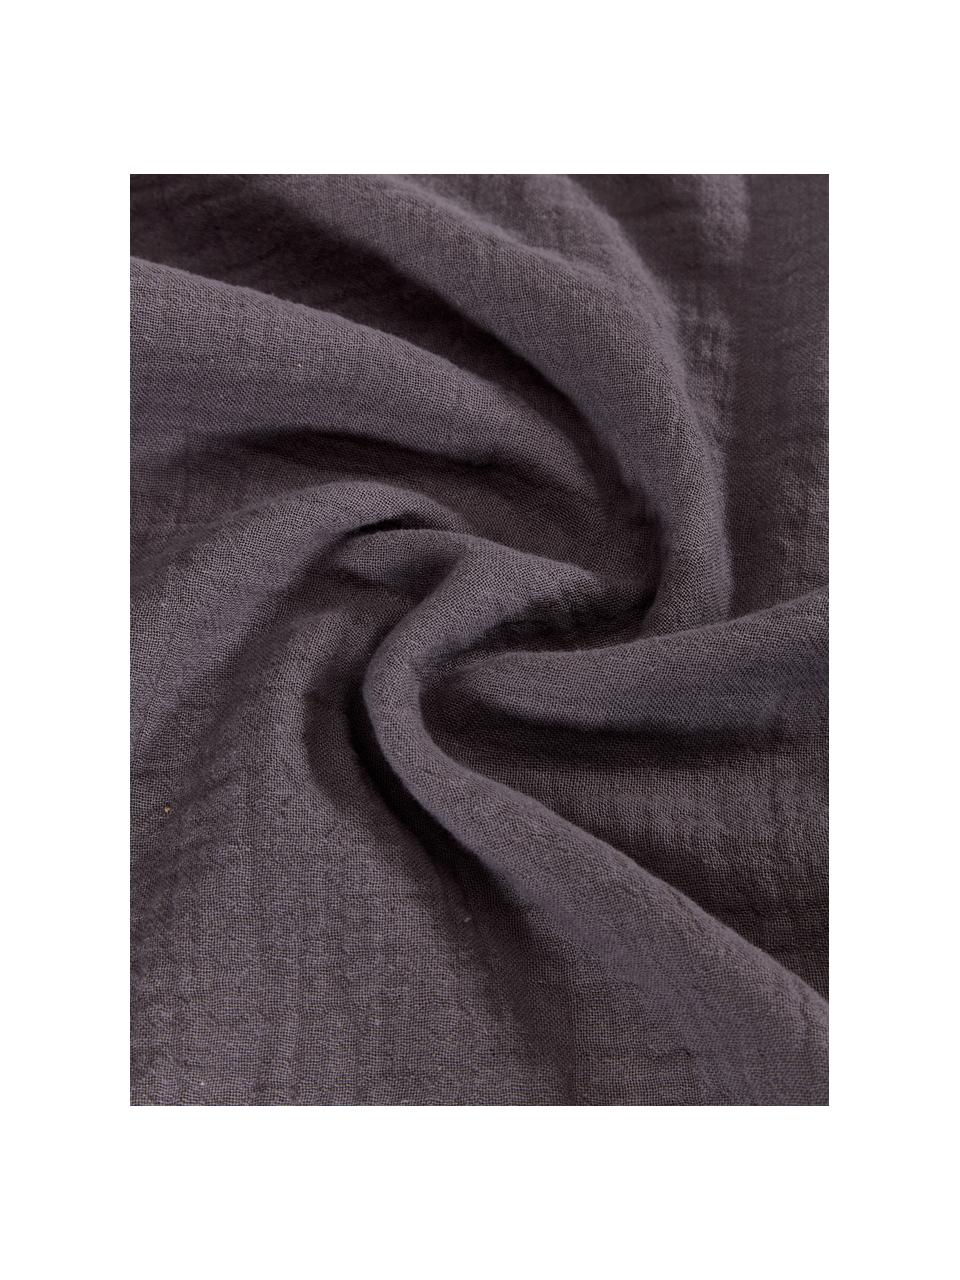 Fundas de almohada muselina de algodón Odile, 2 uds., Gris oscuro, 50 x 70 cm